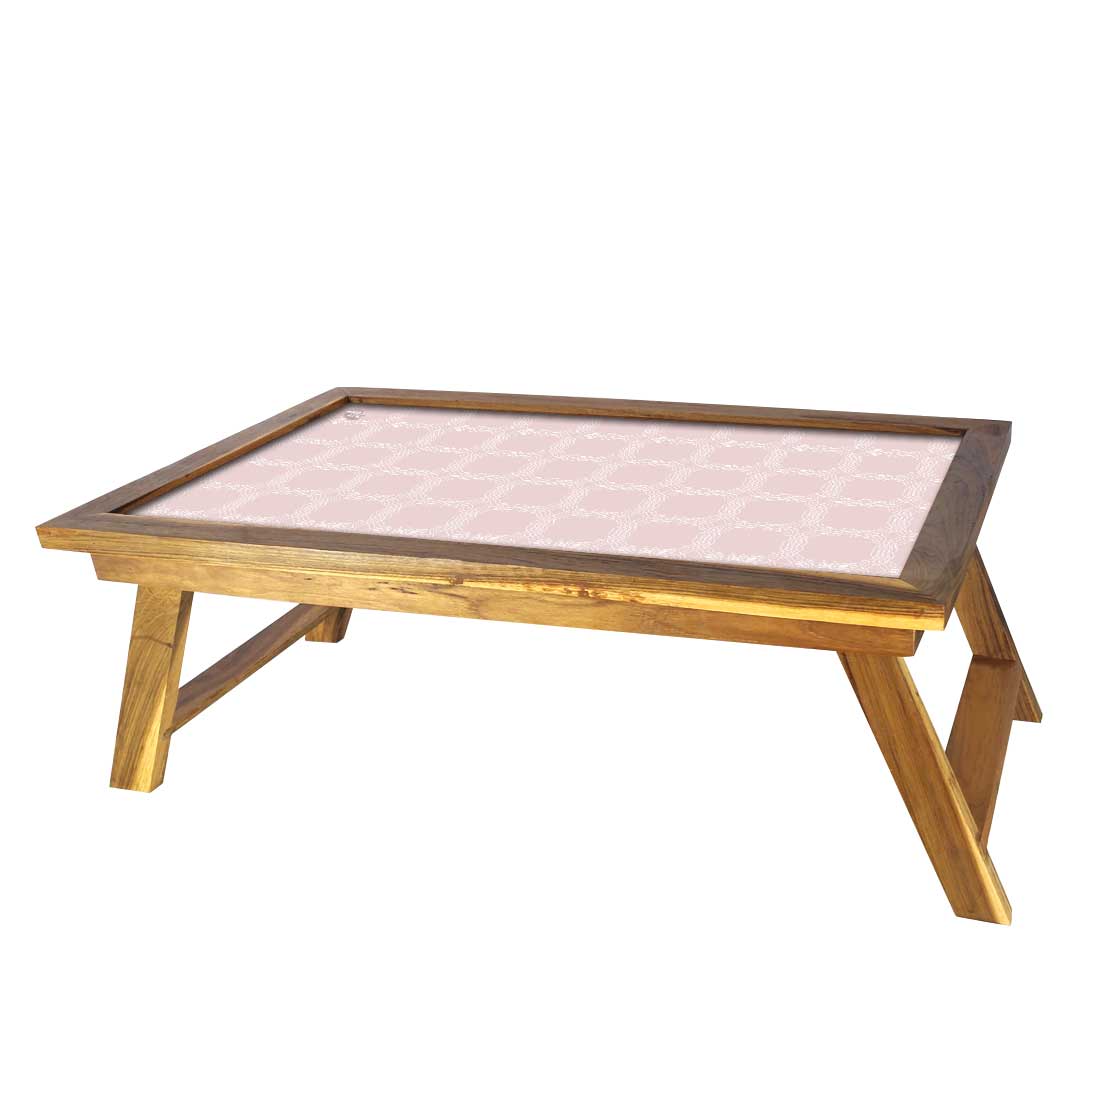 Nutcase Folding Laptop Table For Home Bed Lapdesk Breakfast Table Foldable Teak Wooden Study Desk - Designer Box Pattern Nutcase